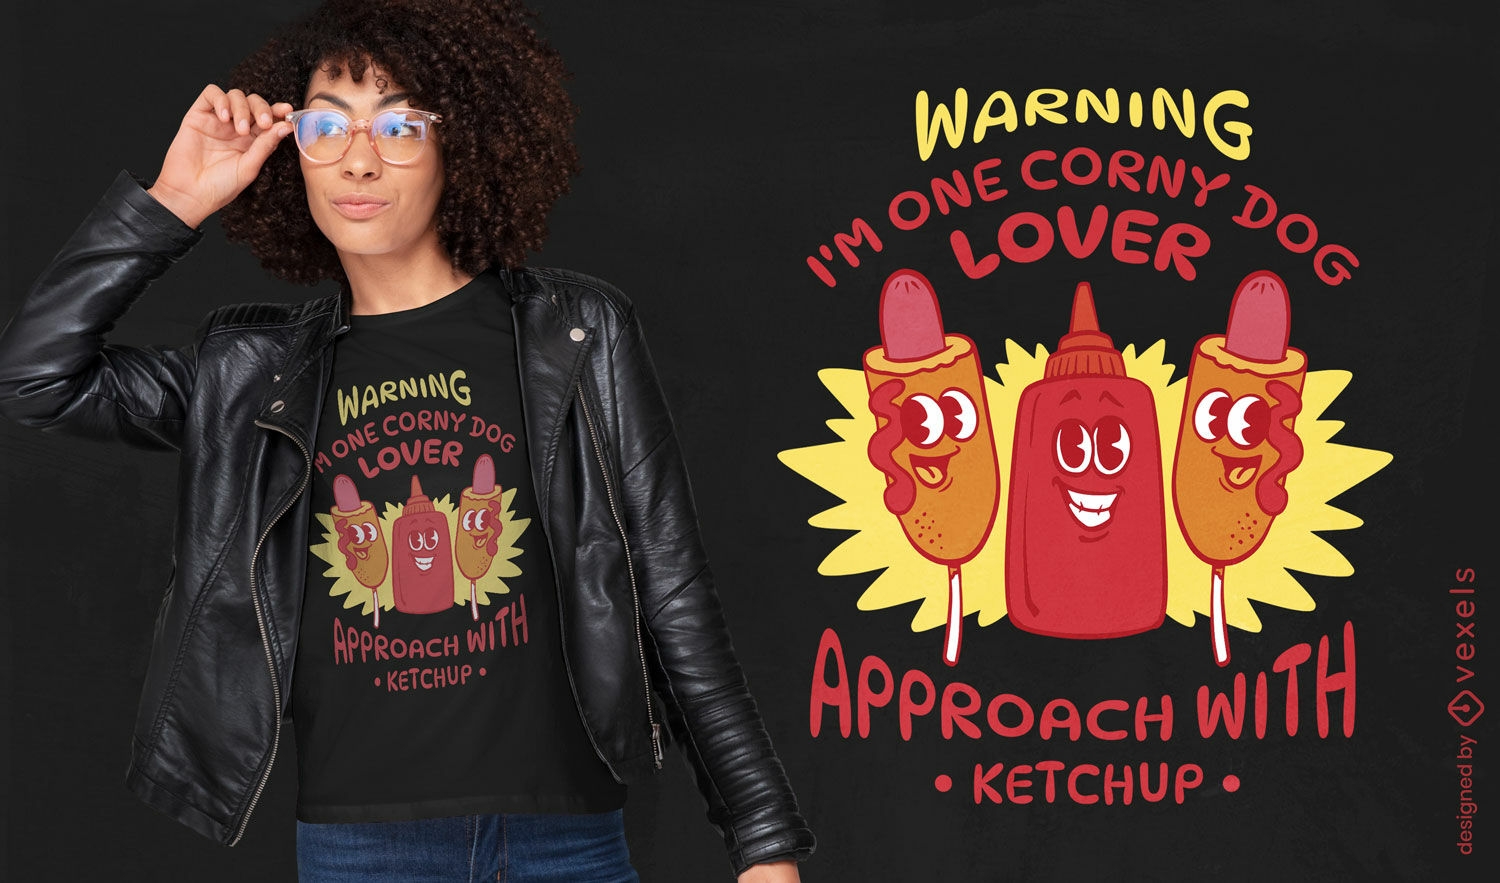 Warning i'm one corny lover t-shirt design